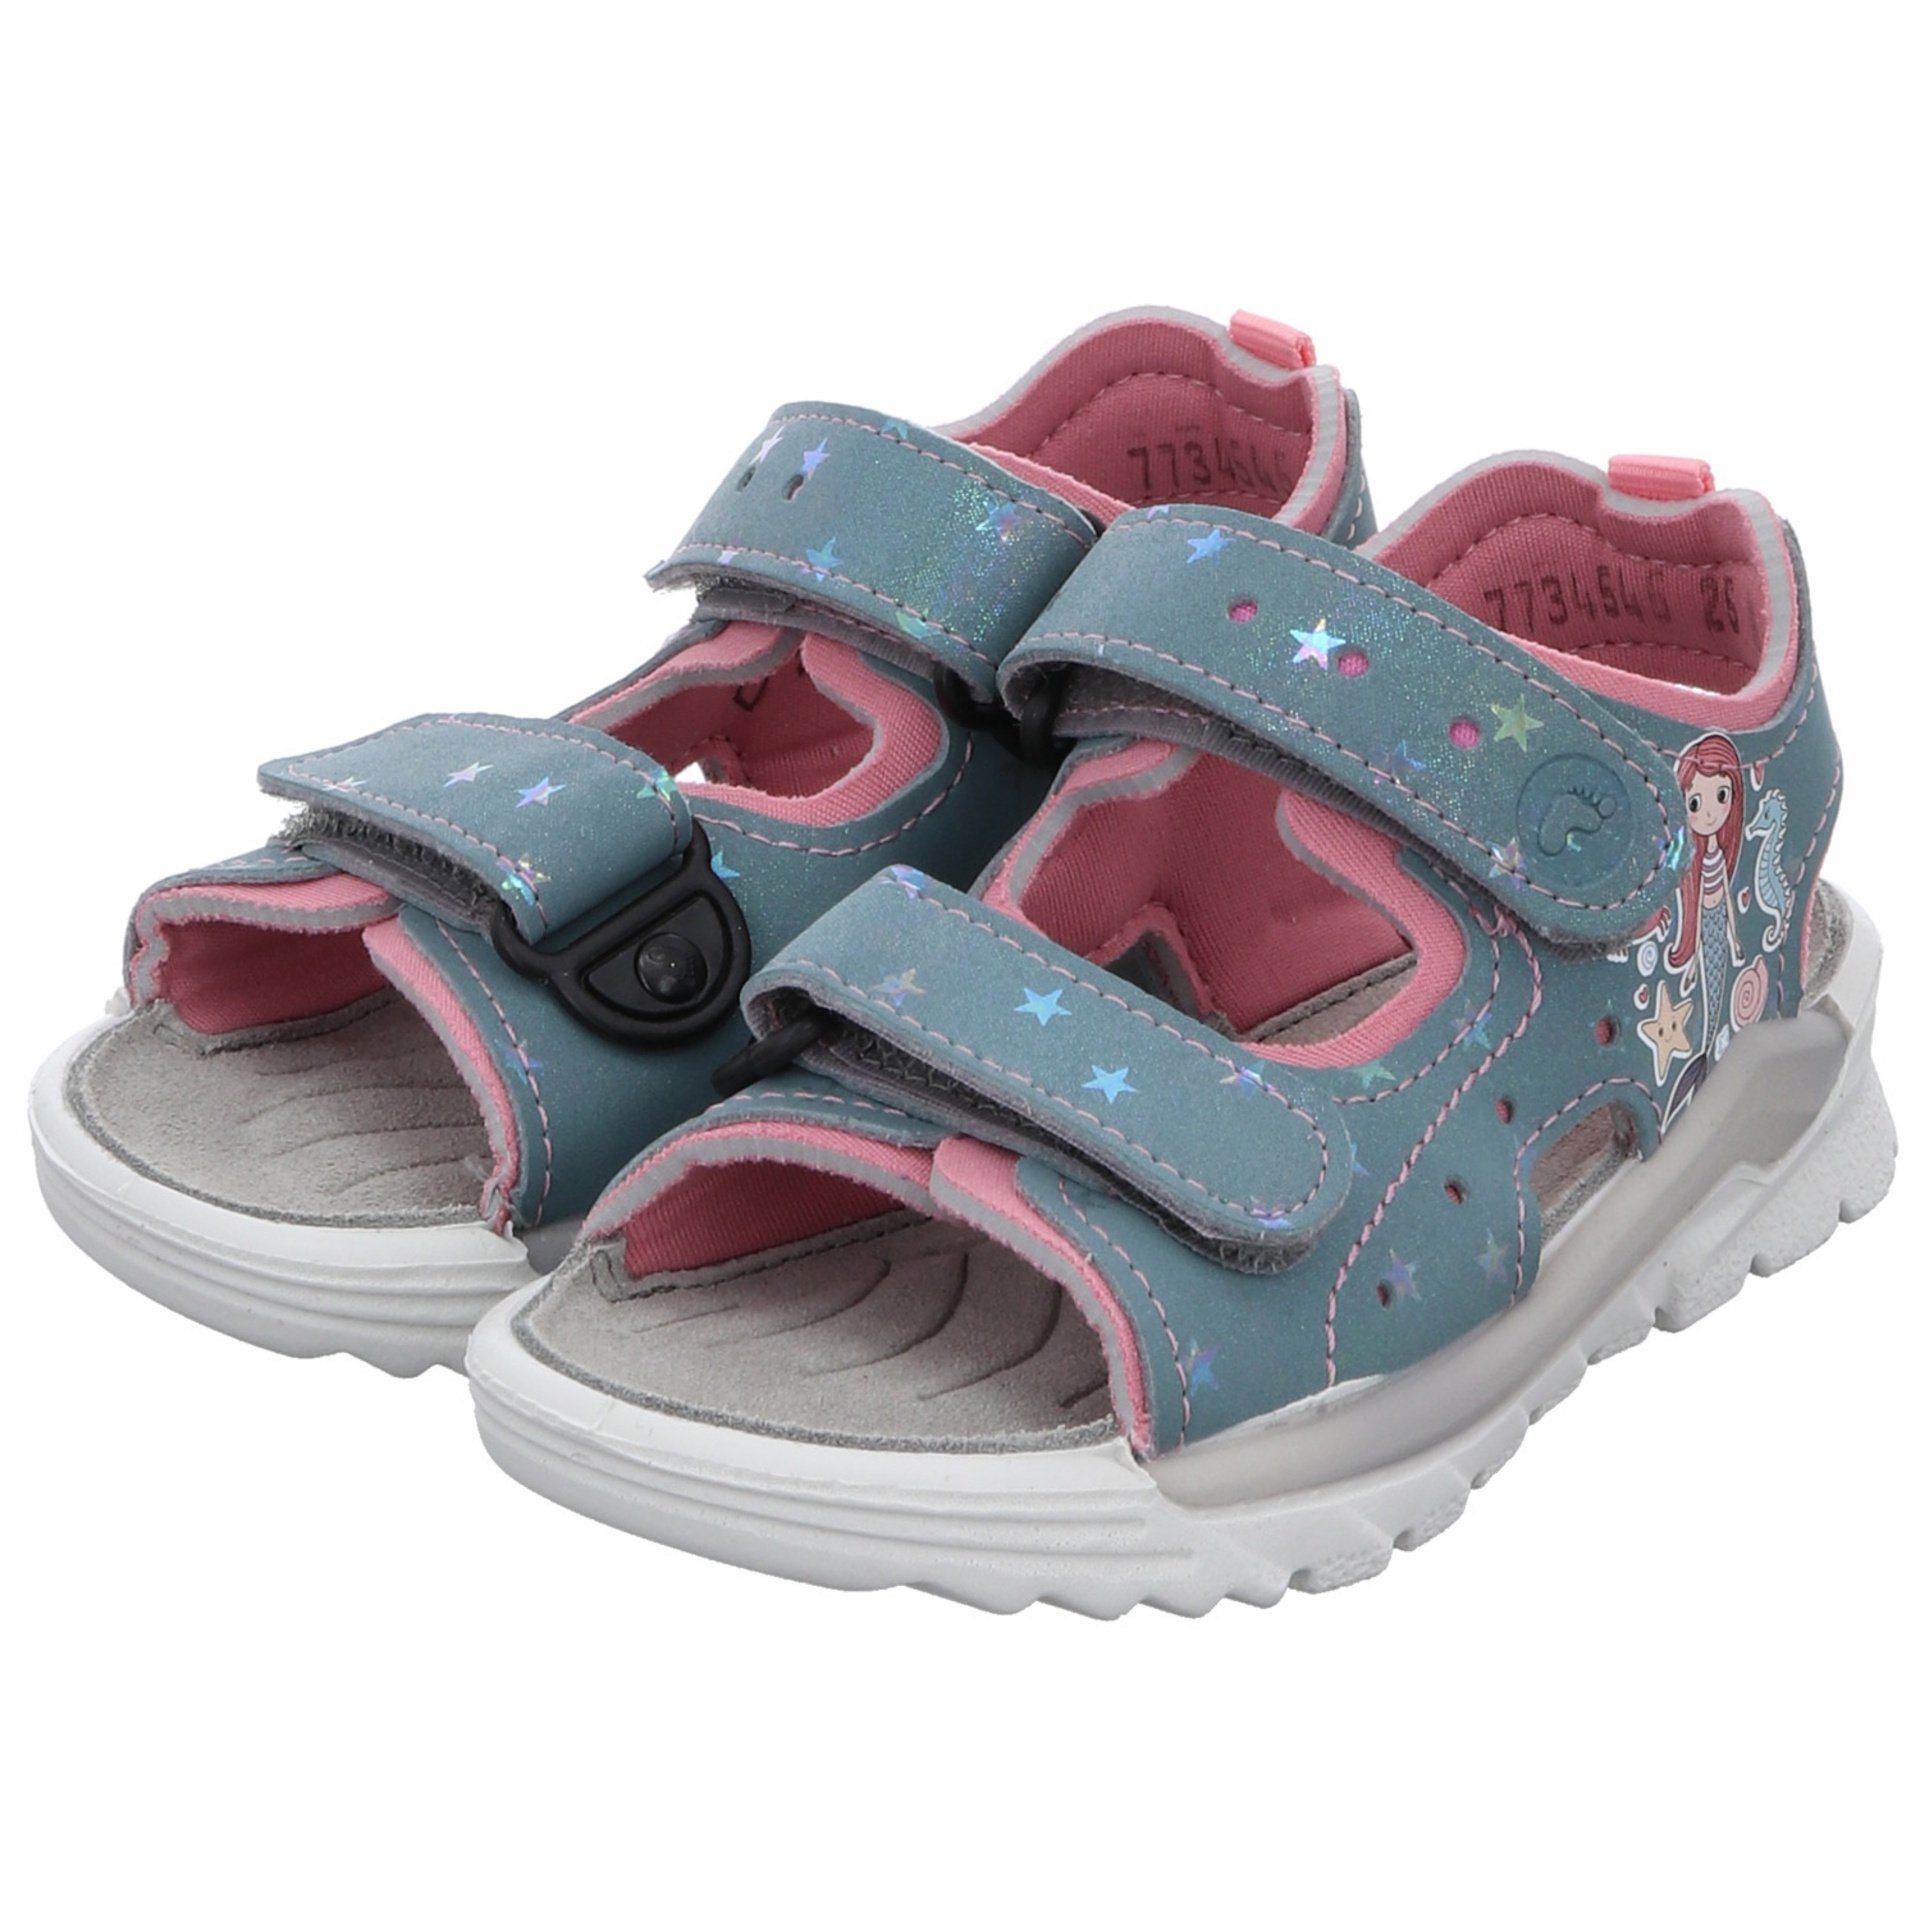 Sandale arctic/mallow Synthetikkombination Ricosta Mädchen (130) Sandale Schuhe Surf Sandalen Kinderschuhe